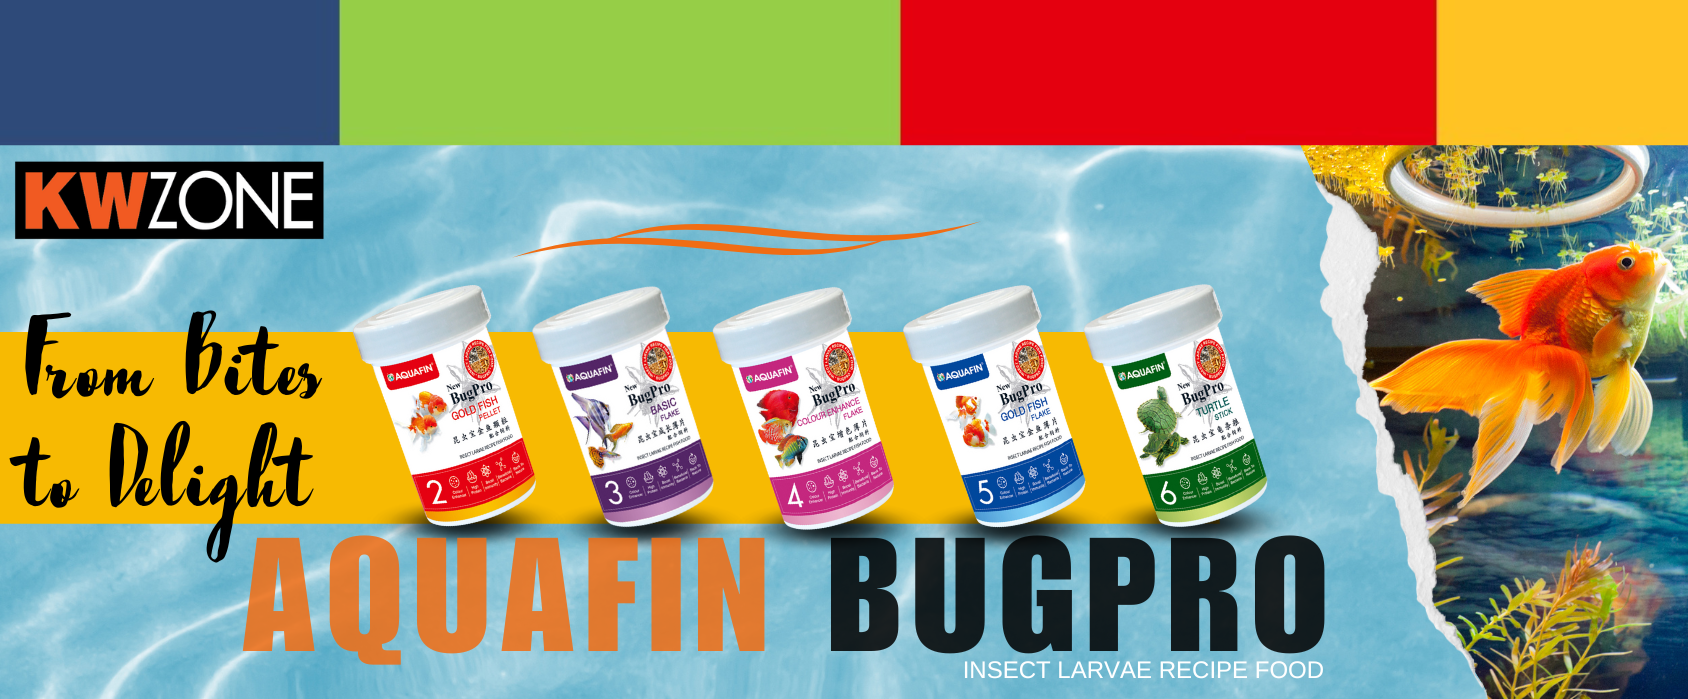 Aquafin BugPro - Insect Larvae Recipe Food